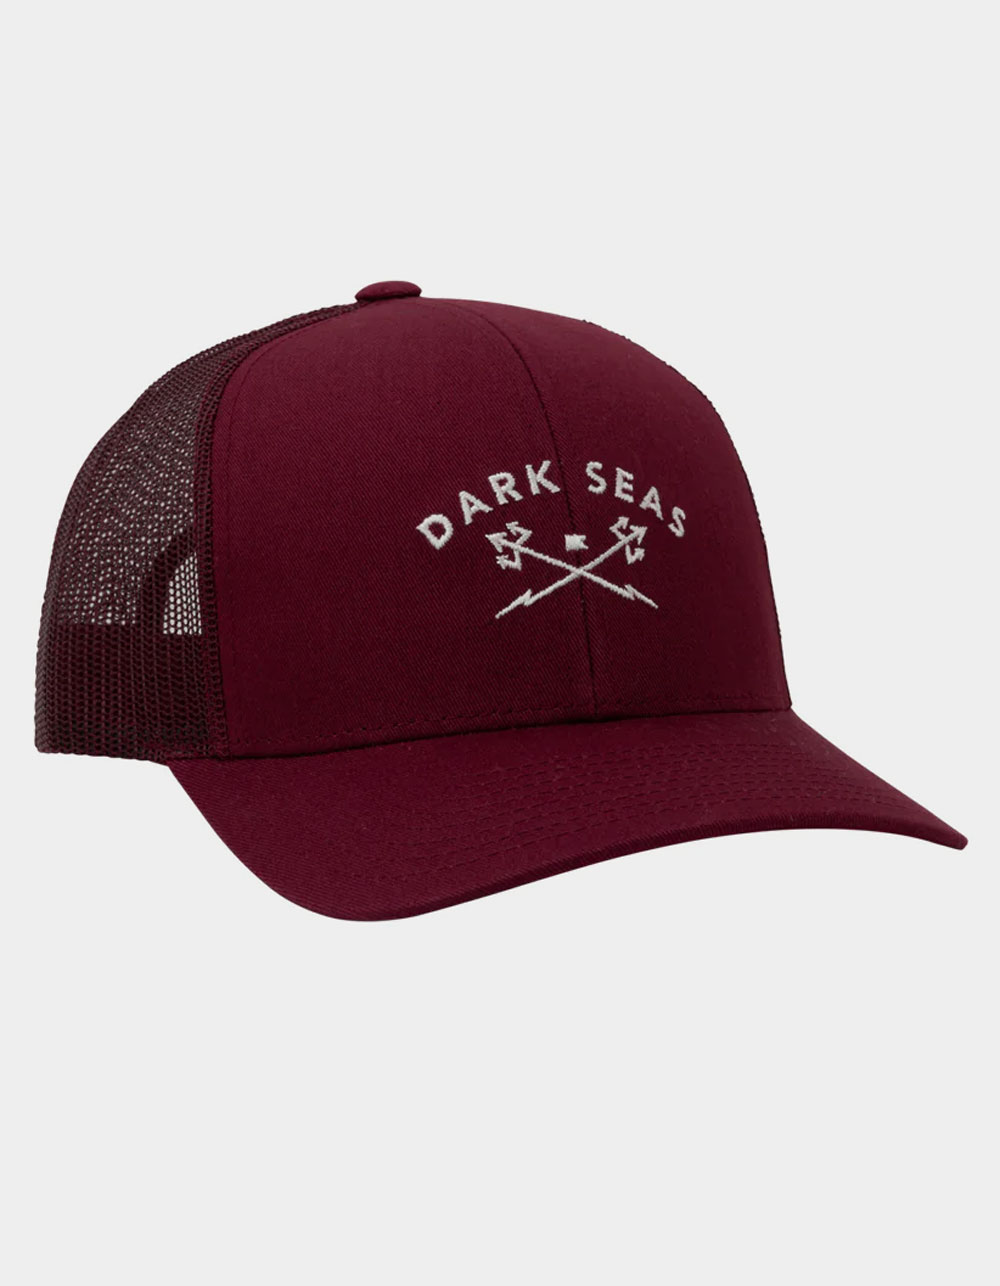 DARK SEAS Murre Trucker Hat